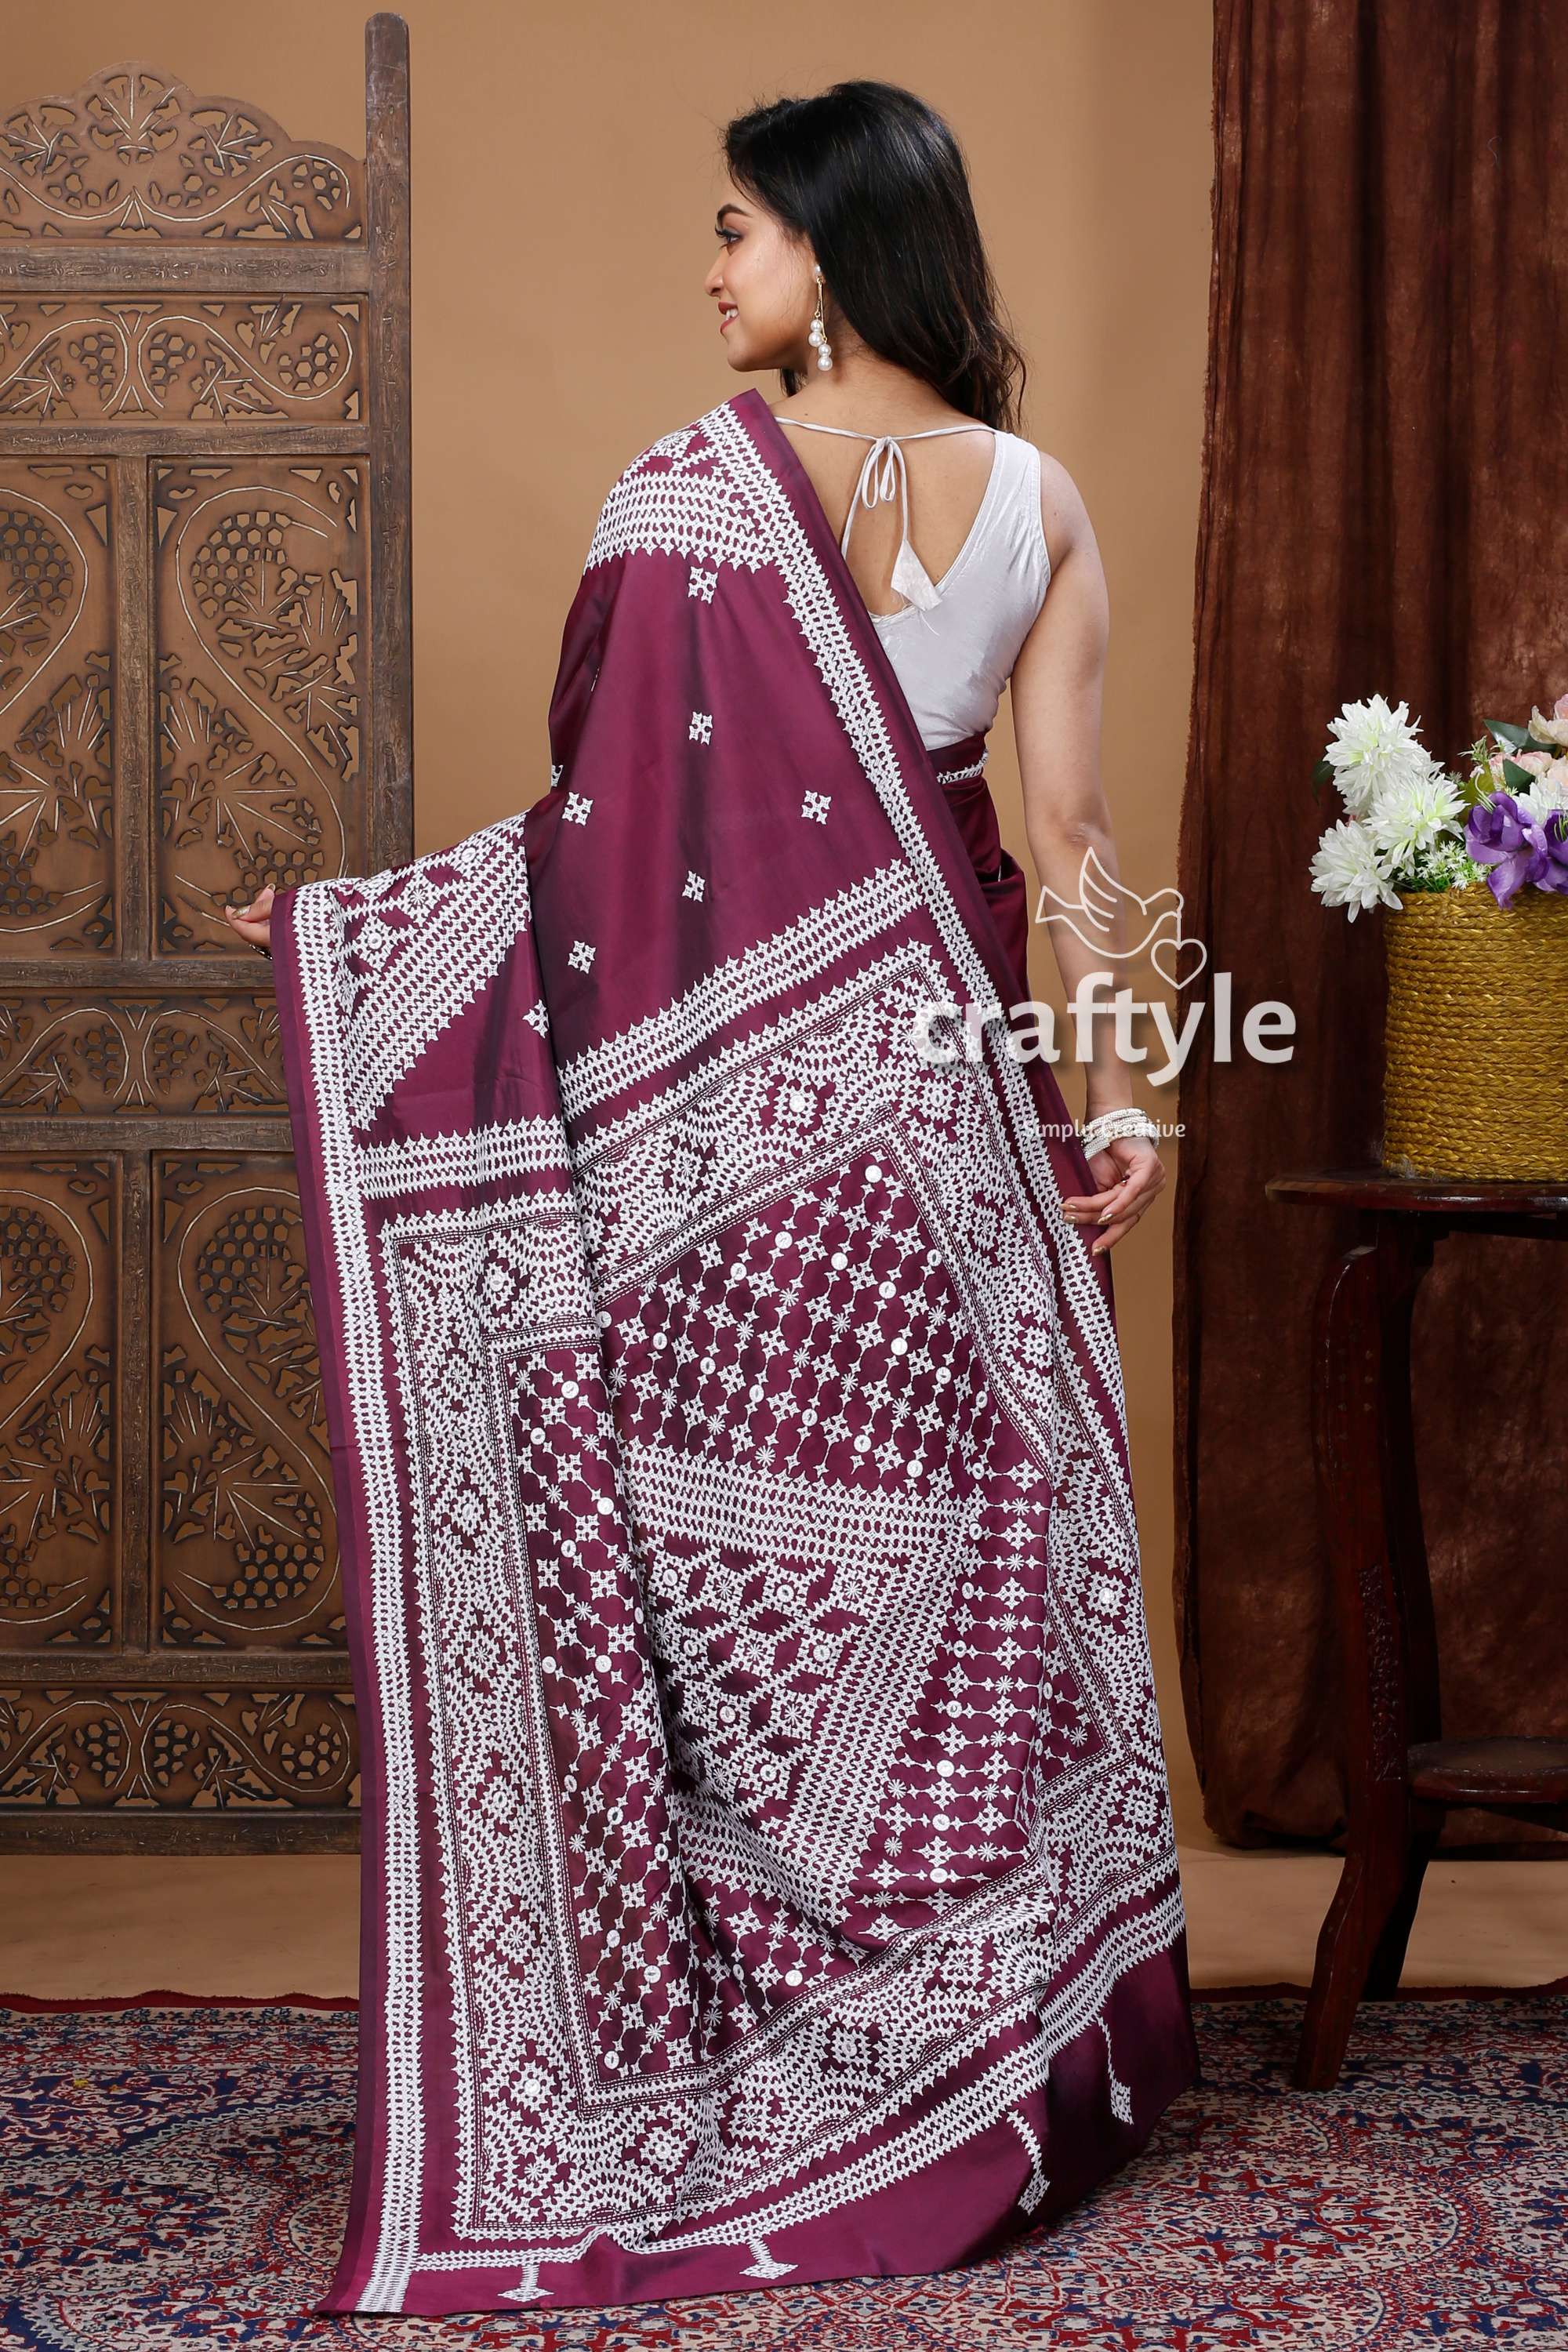 Sangria Purple Hand Embroidered Kantha Silk Saree - Elegant and Luxurious-Craftyle